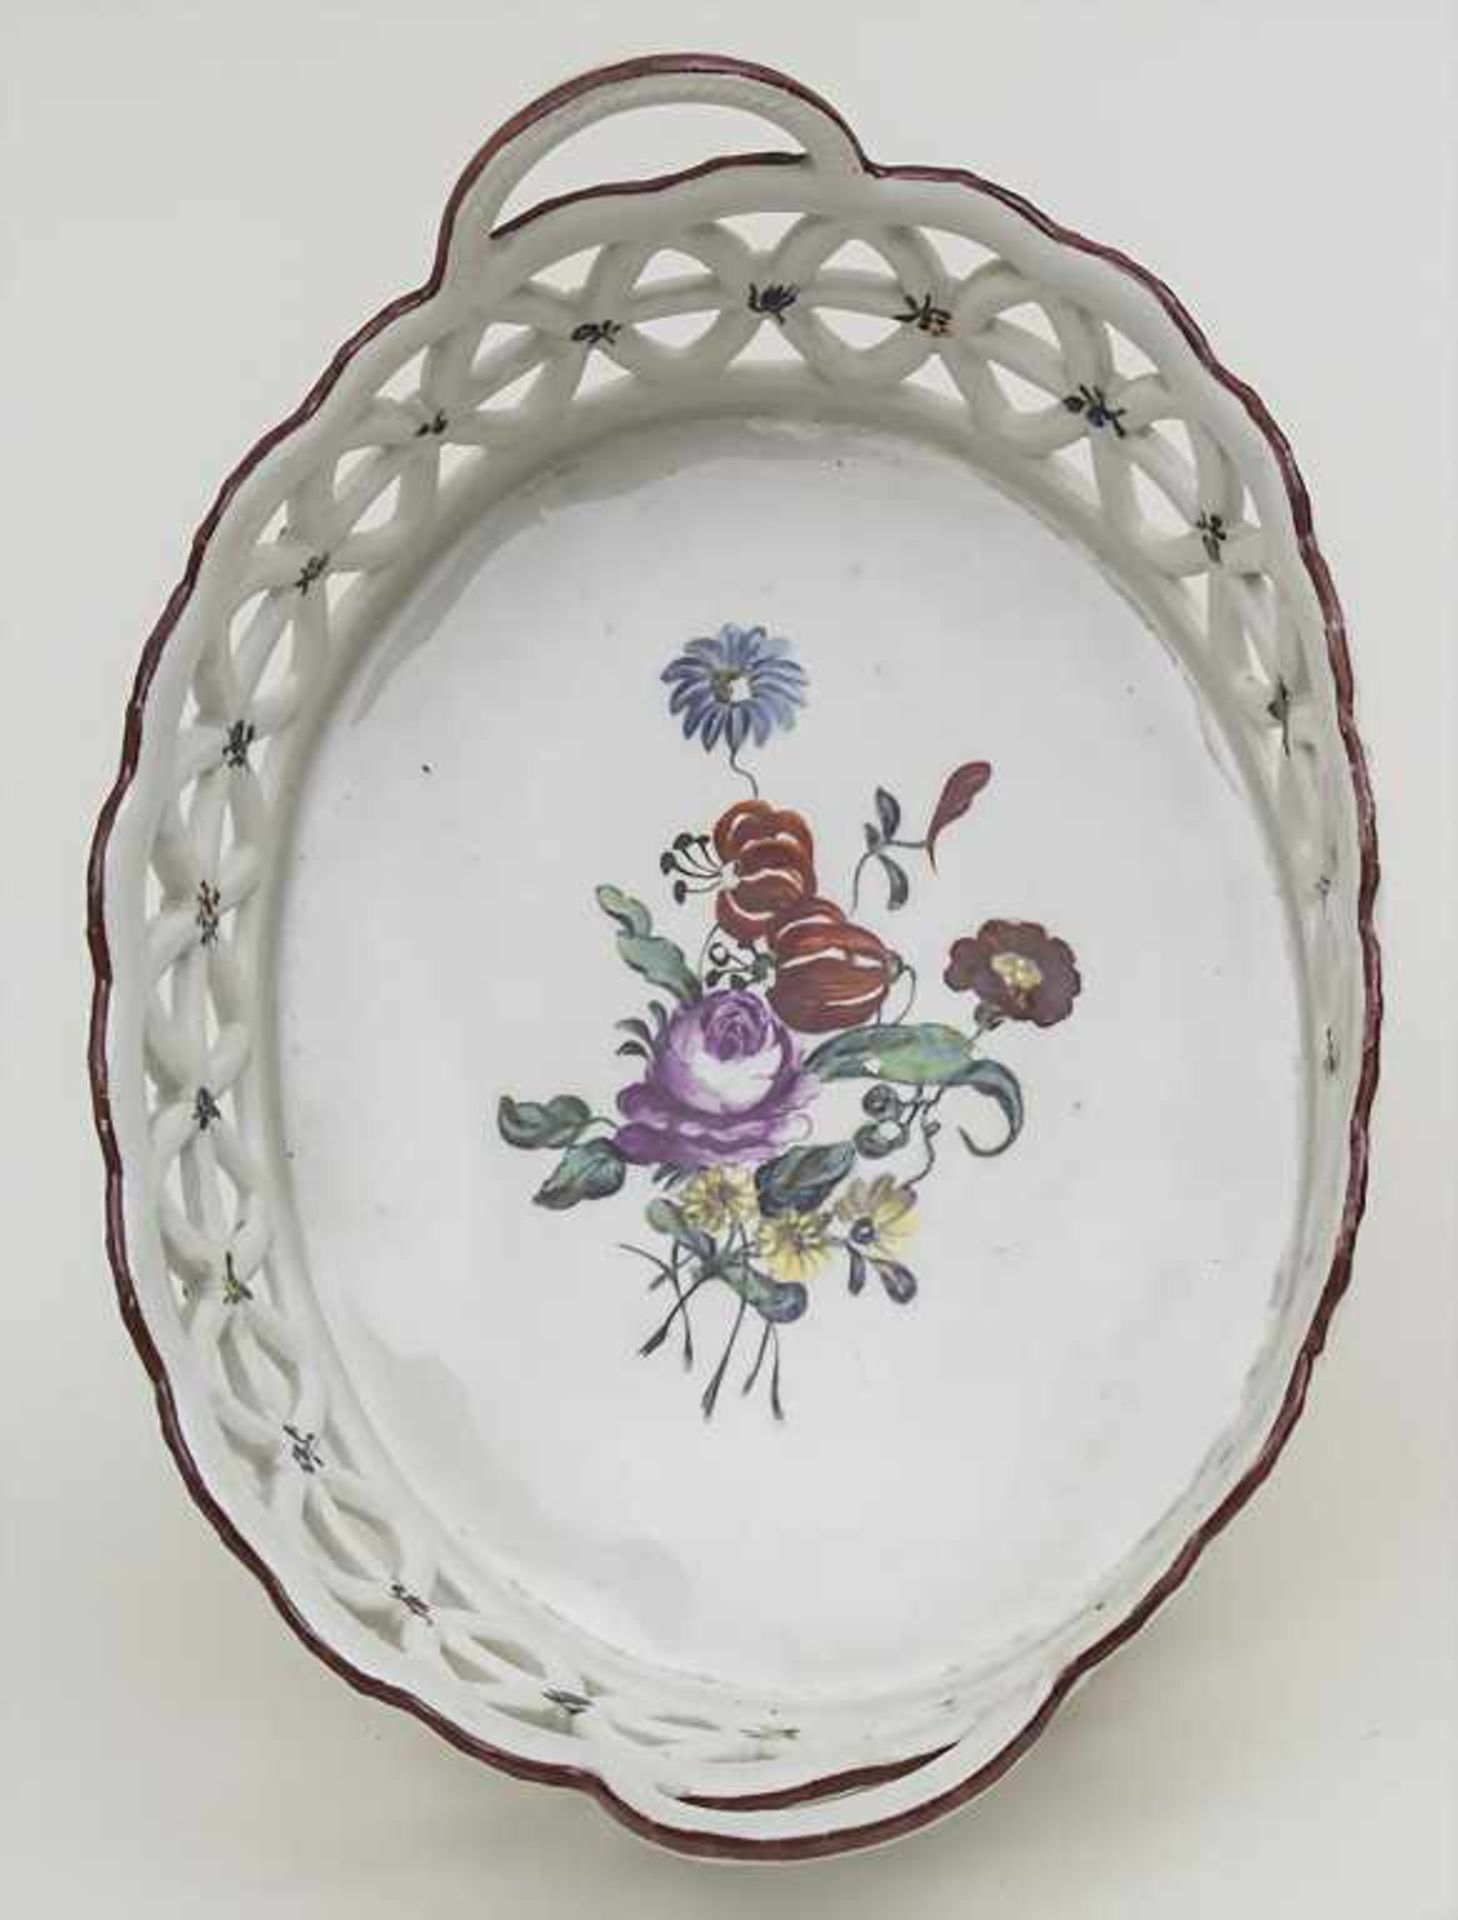 Ovale Korbschale / An oval basket, Ludwigsburg, um 1750 Material: Porzellan, polychrom bemalt, - Bild 2 aus 3